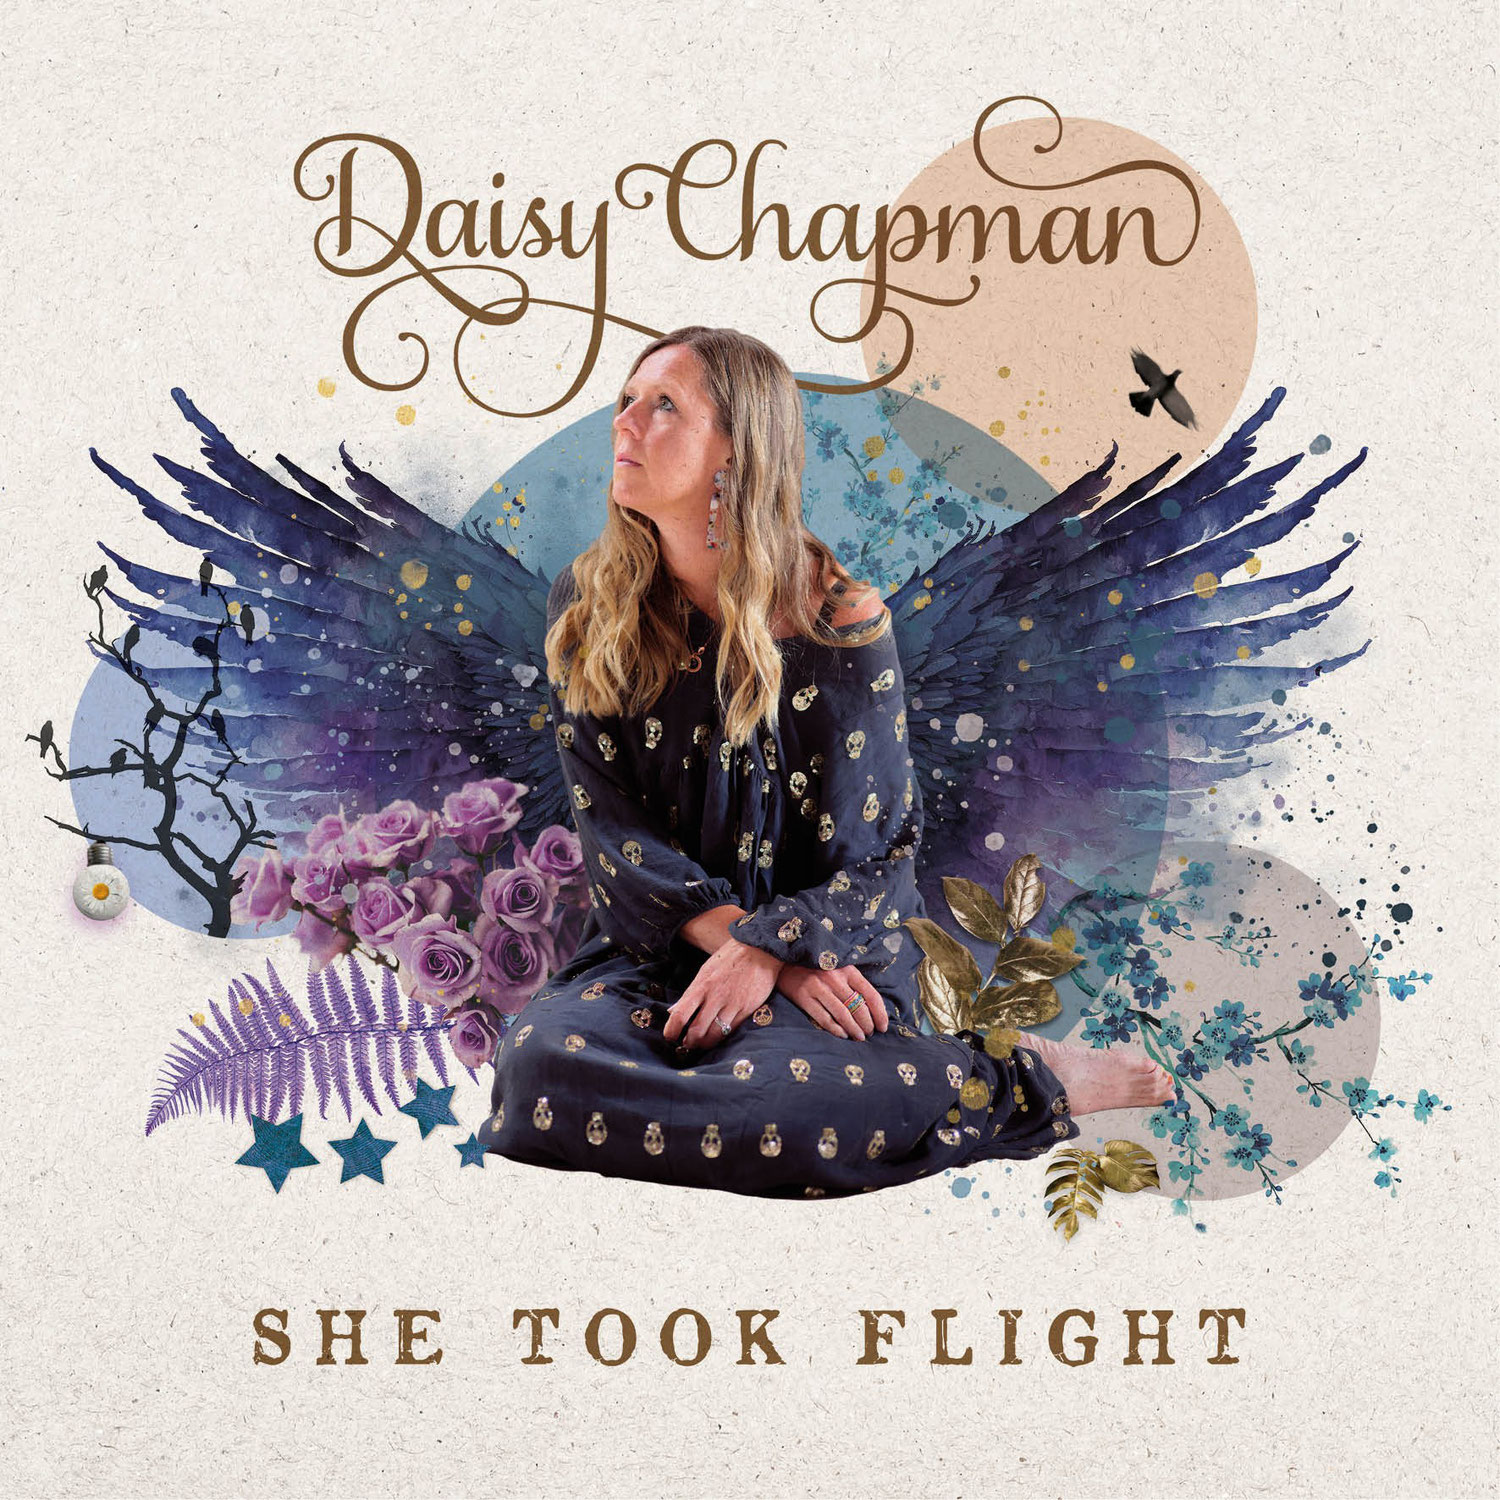 Daisy Chapman releases album "She Took Flight"